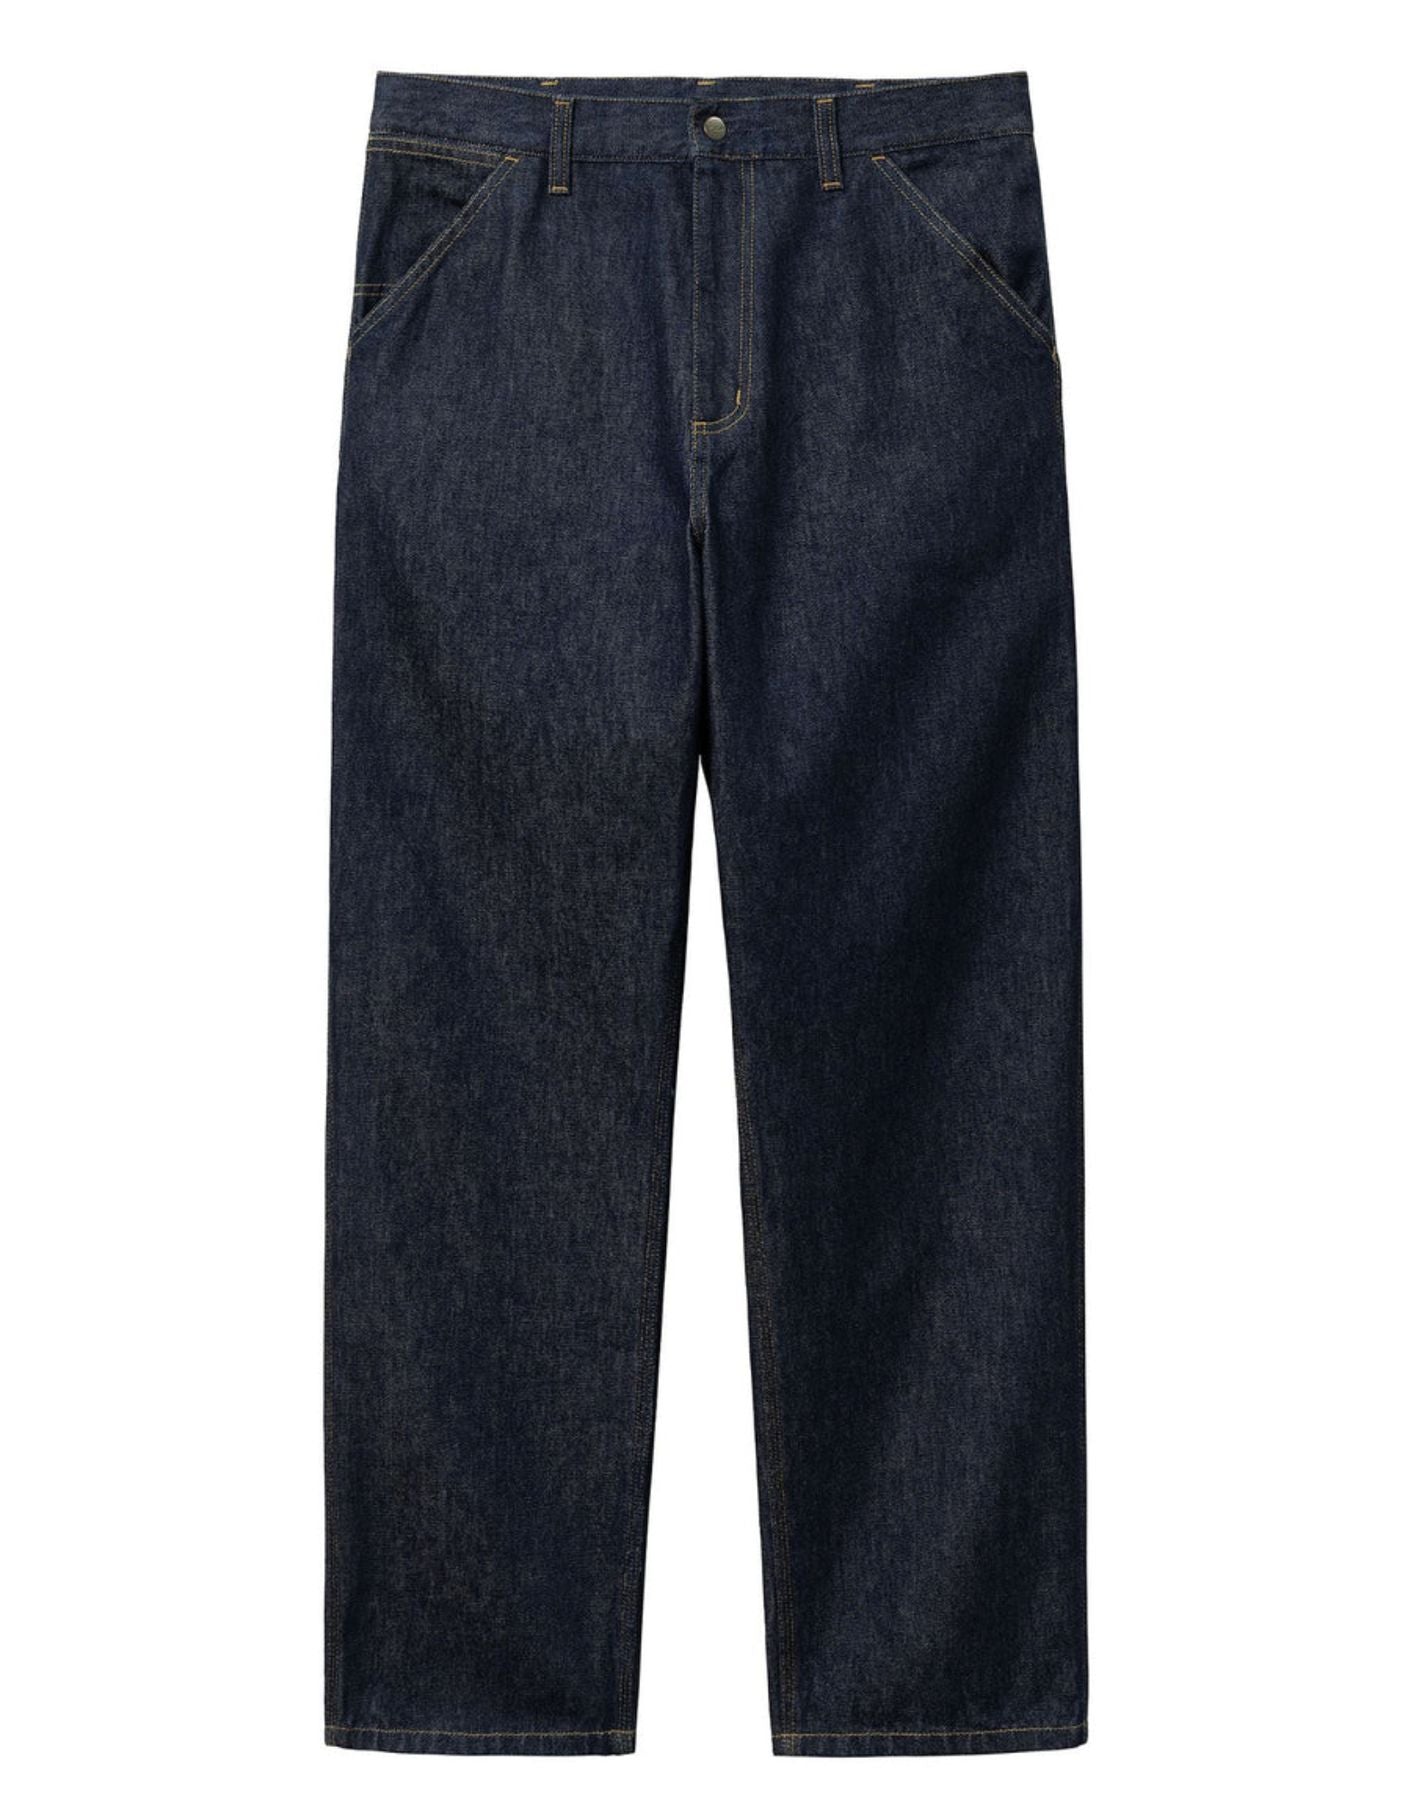 Jeans für Männer I032024 BLUE CARHARTT WIP